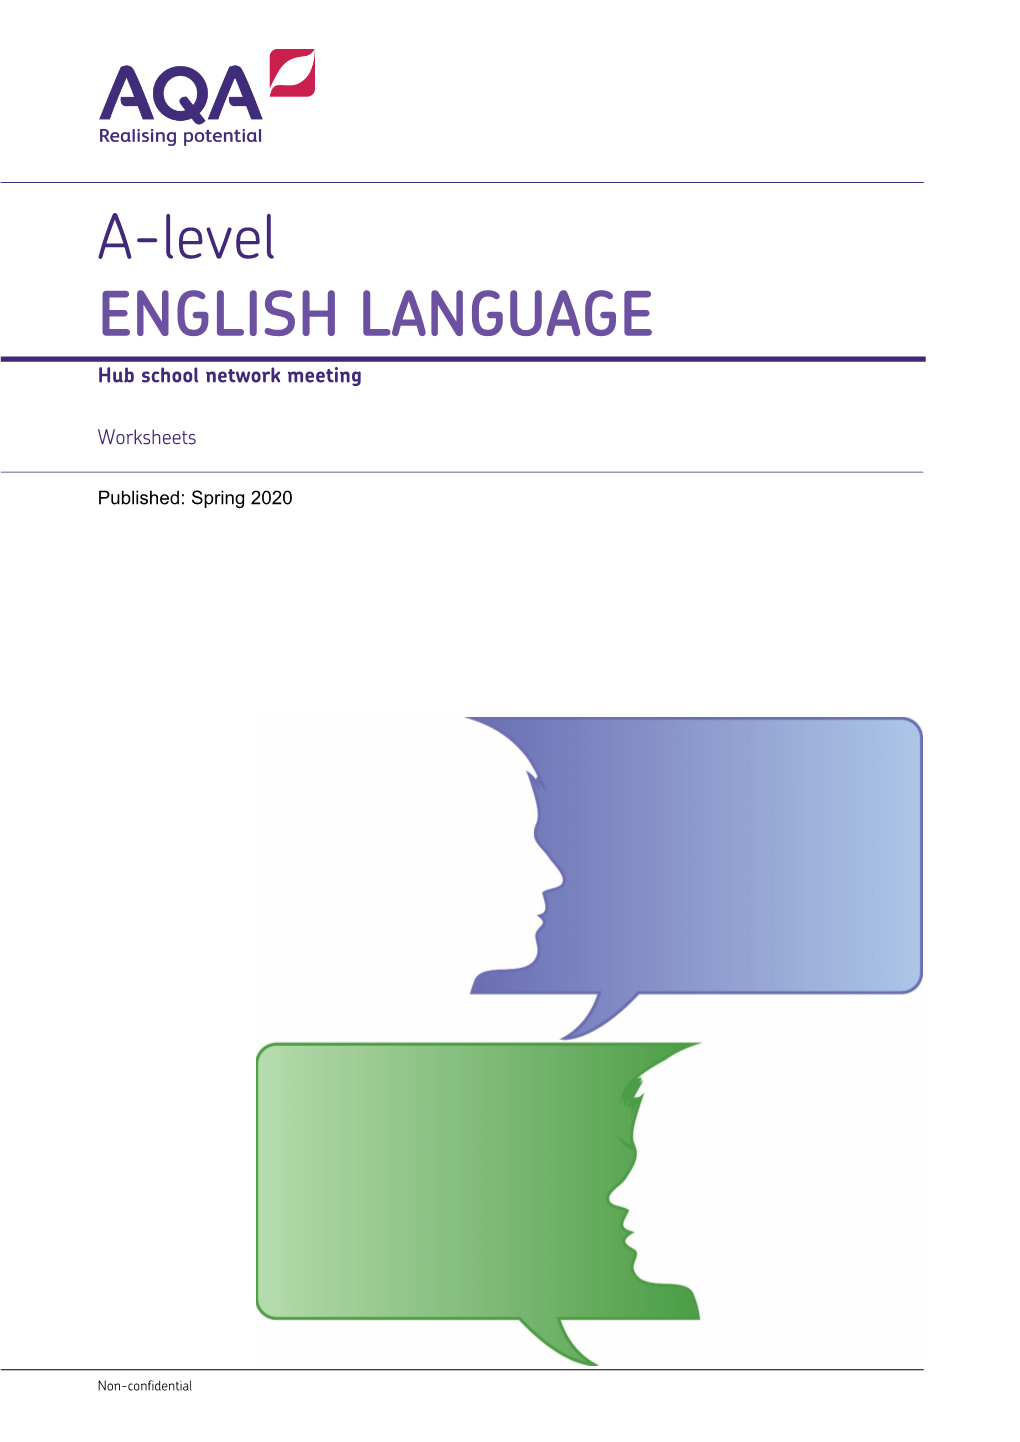 A-Level English Language Networking Hub Spring 2020